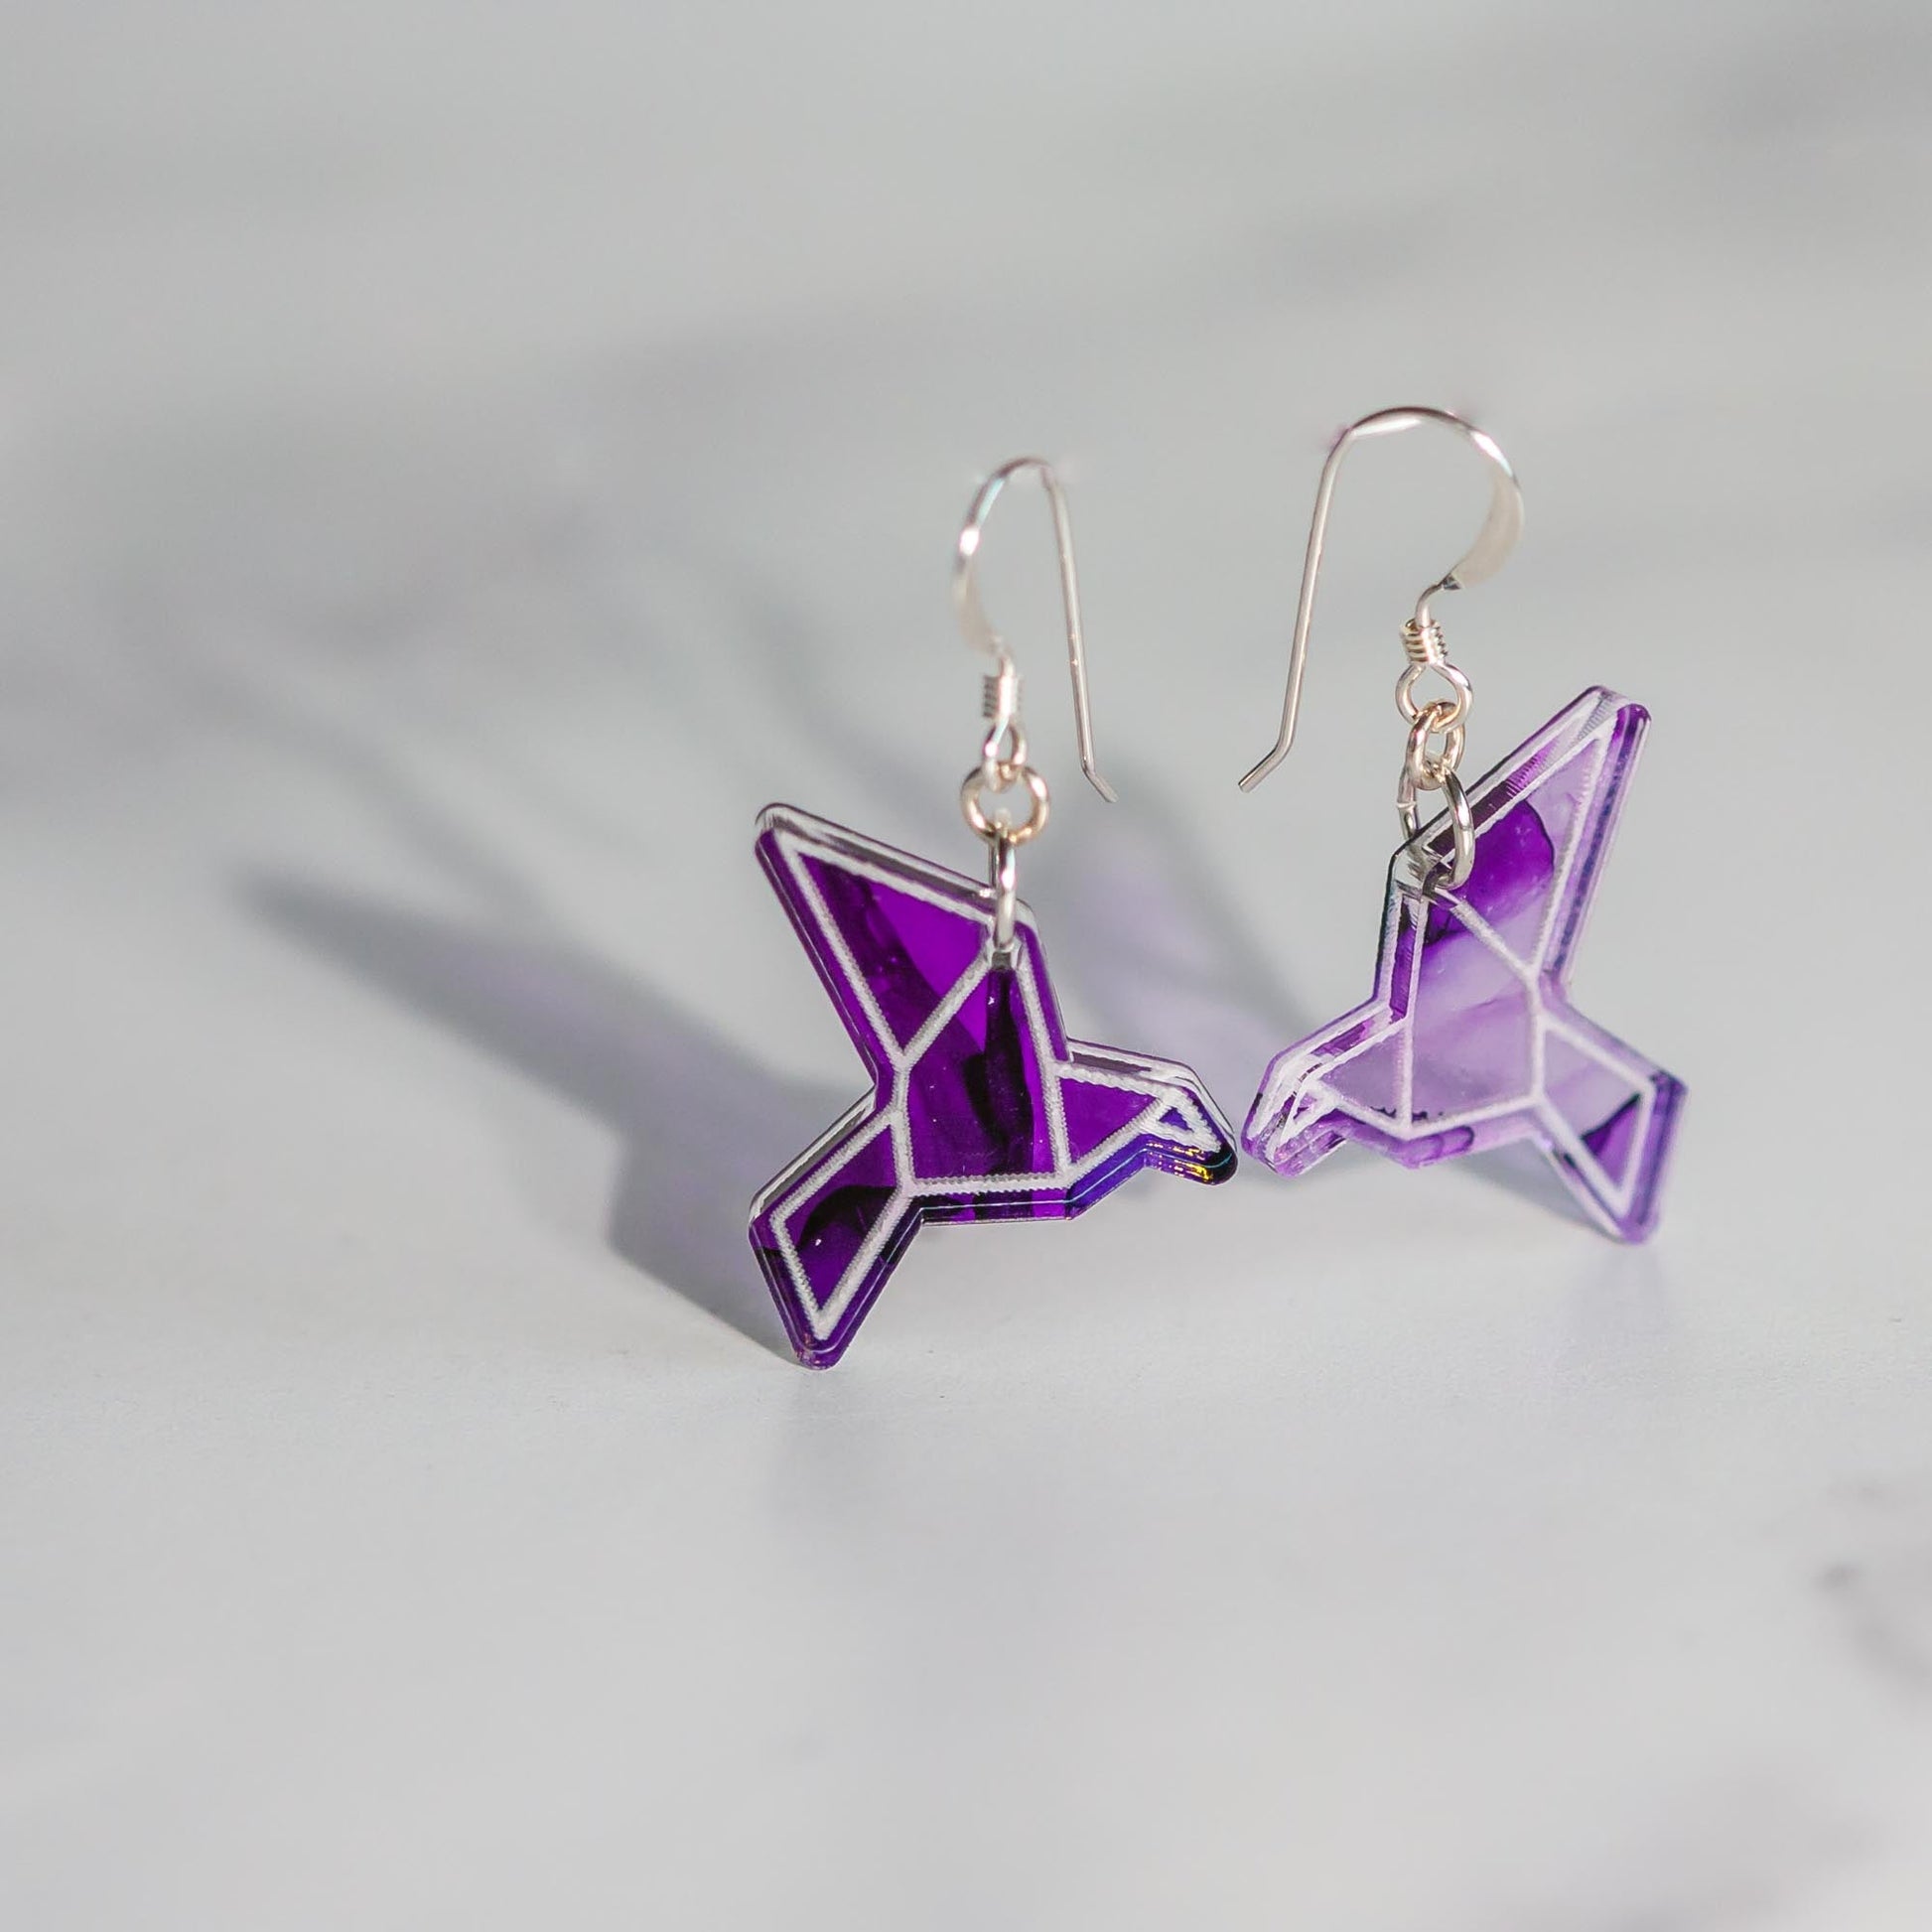 Acrylic Earrings - Purple Alcohol Ink Geometric Cranes - by LeeMo Designs in Bend, Oregon